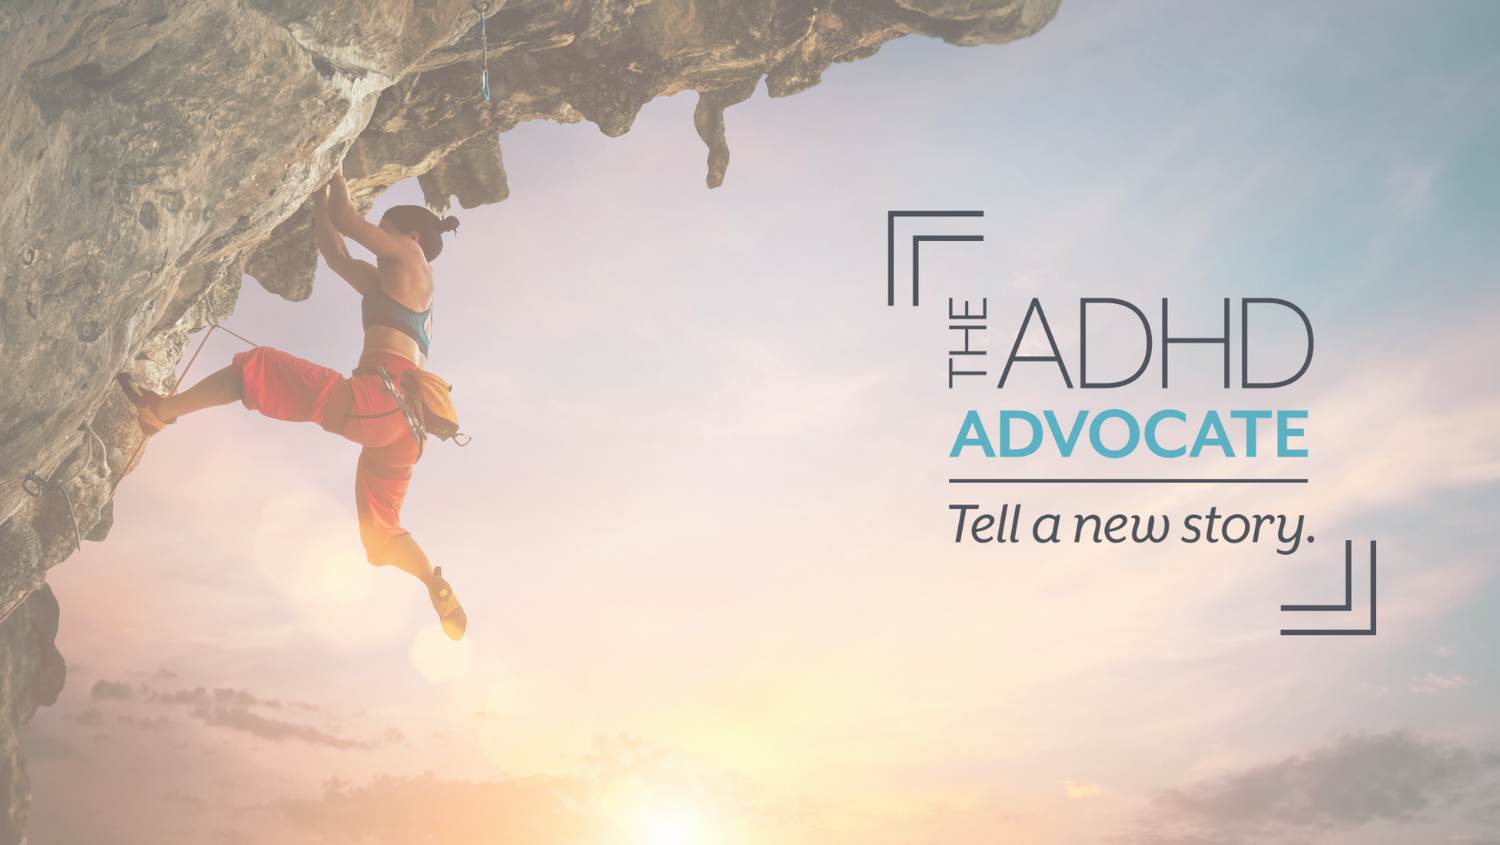 The ADHD Advocate